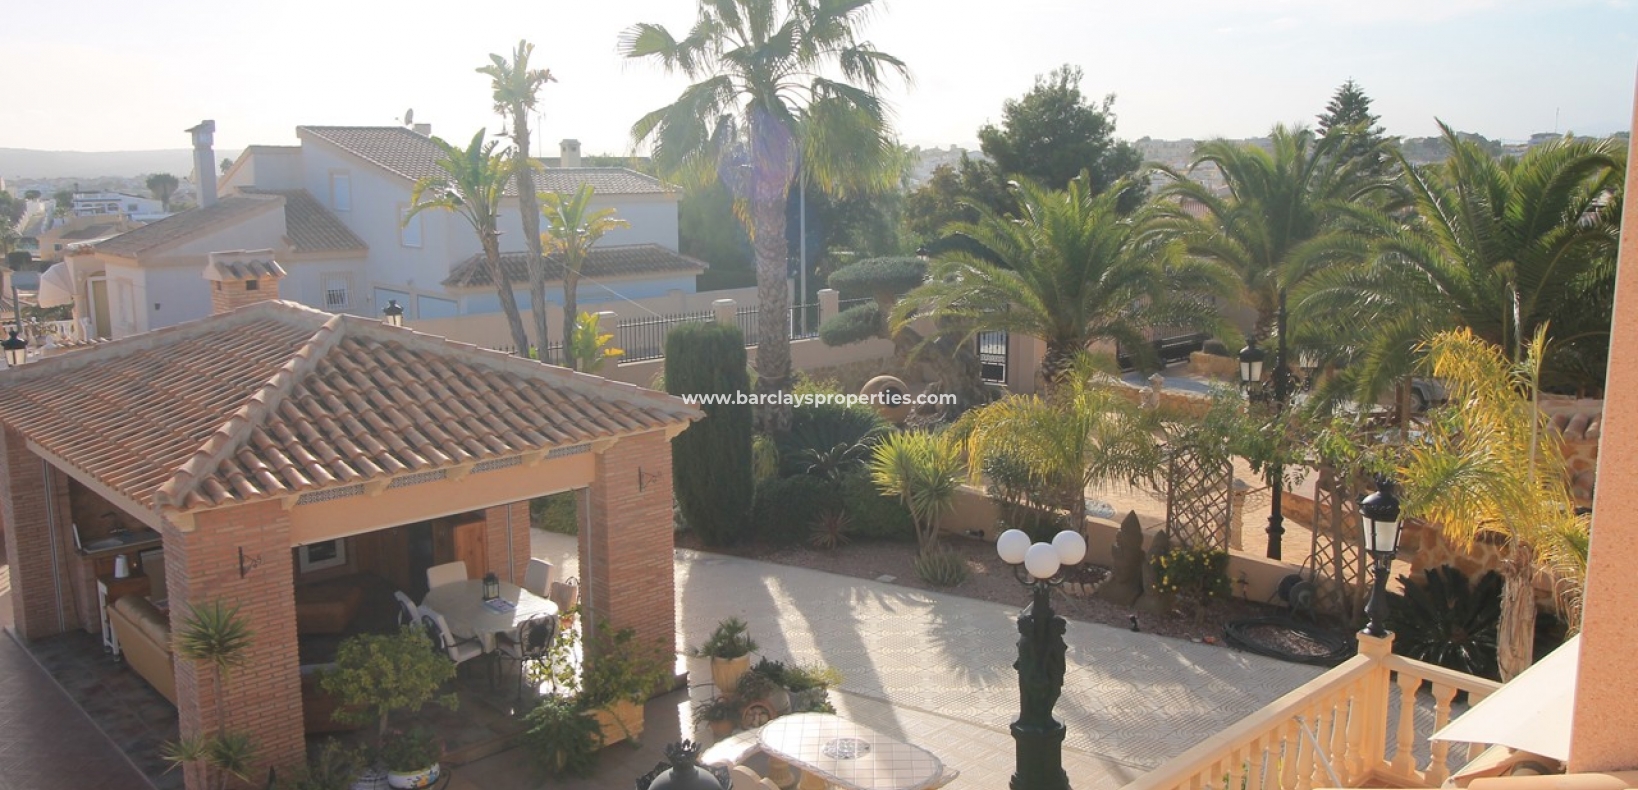 Garden views - Large detached villa for sale in La Escuera